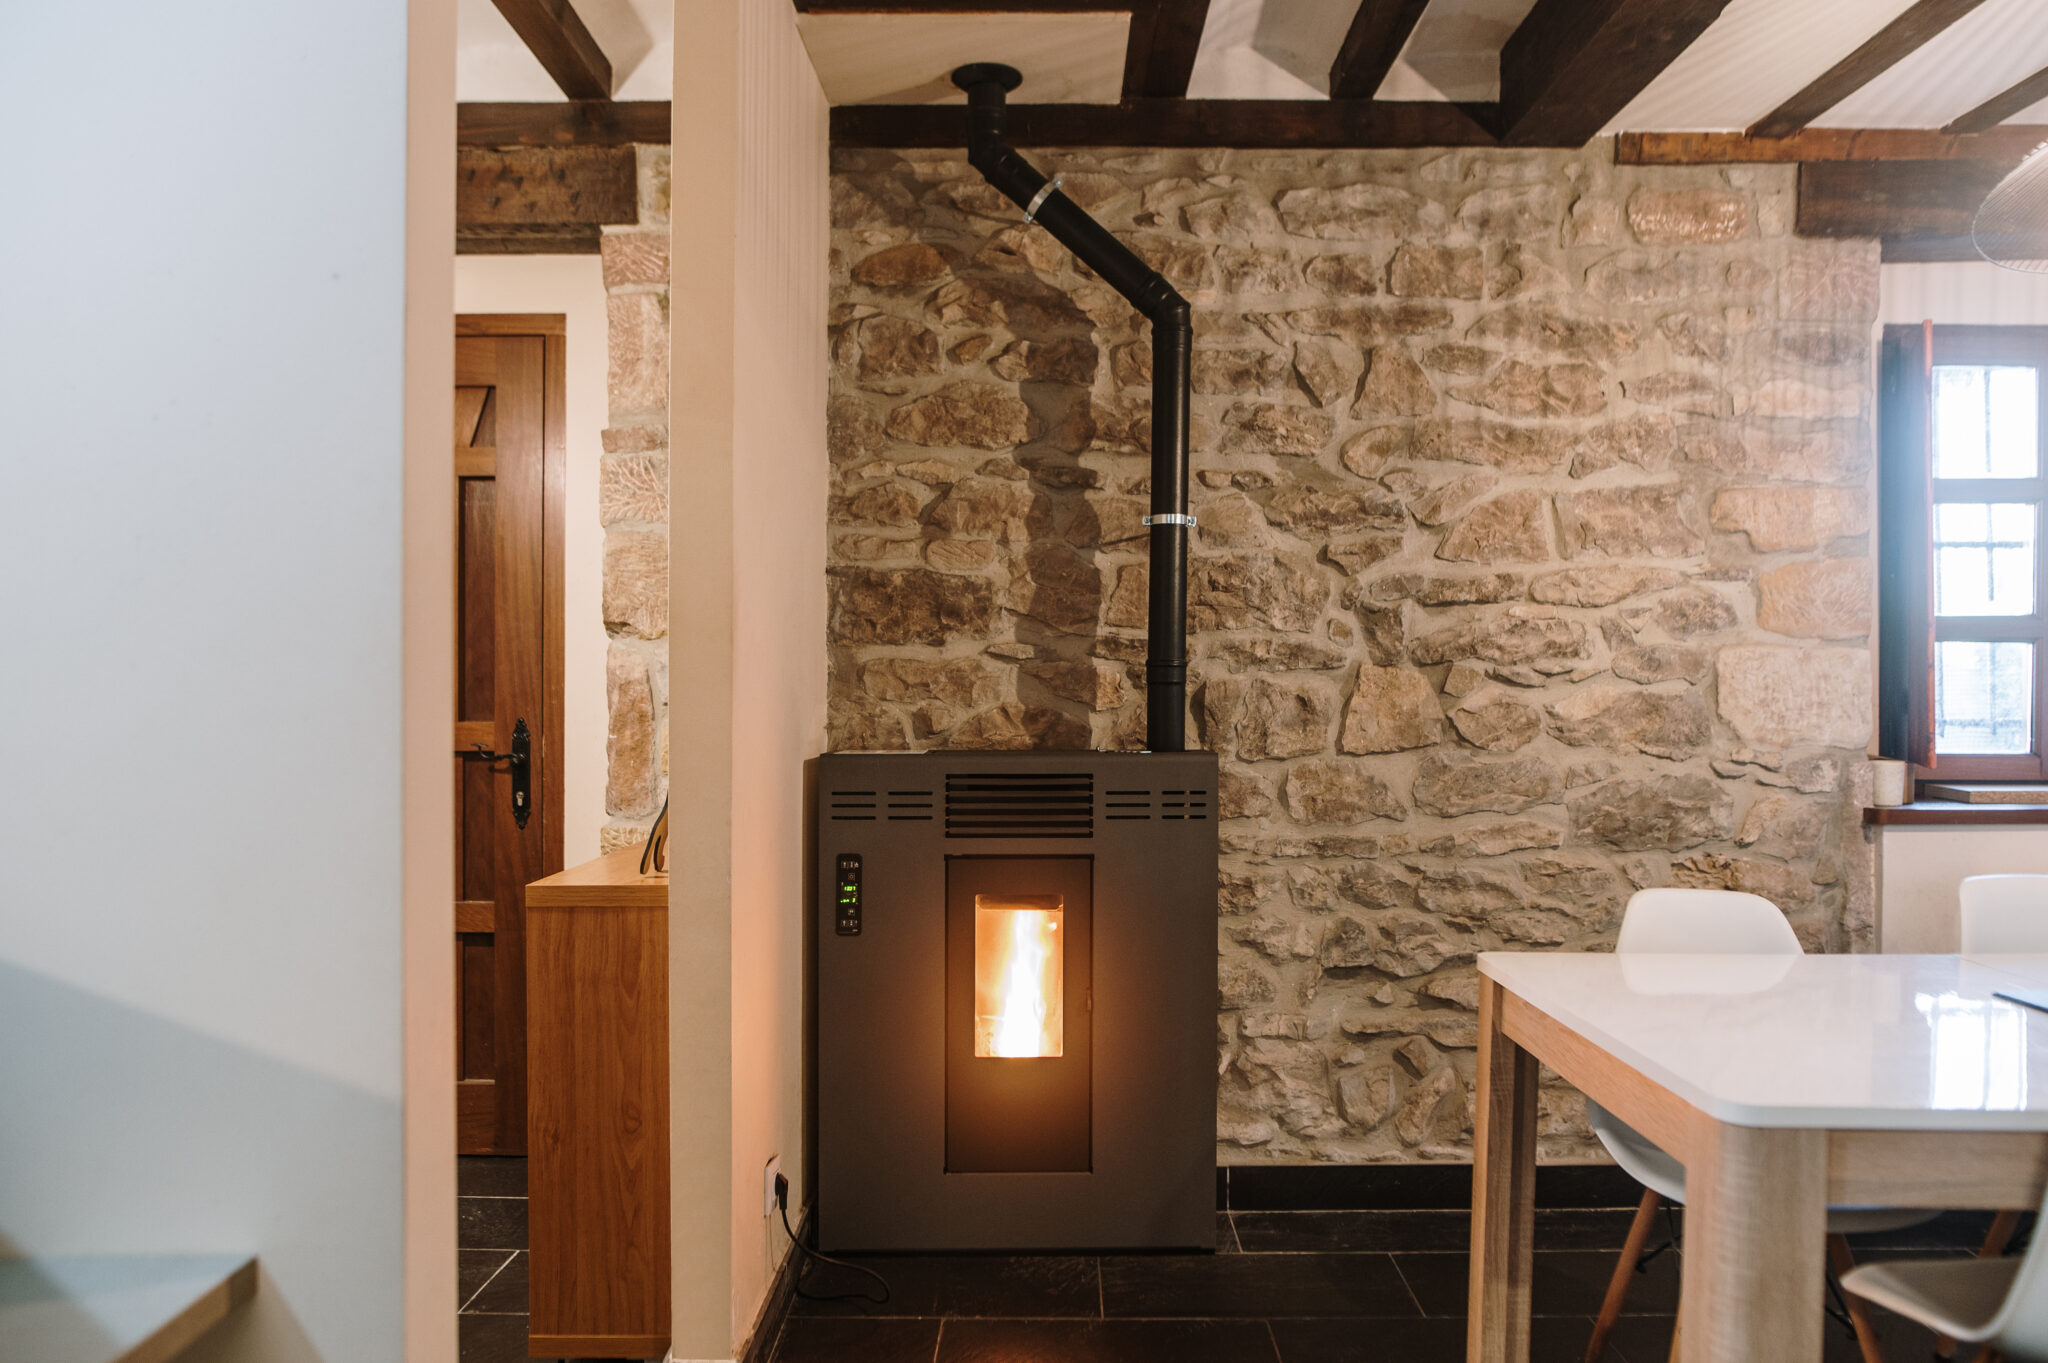 Burning biomass / Pellet stove inside a house